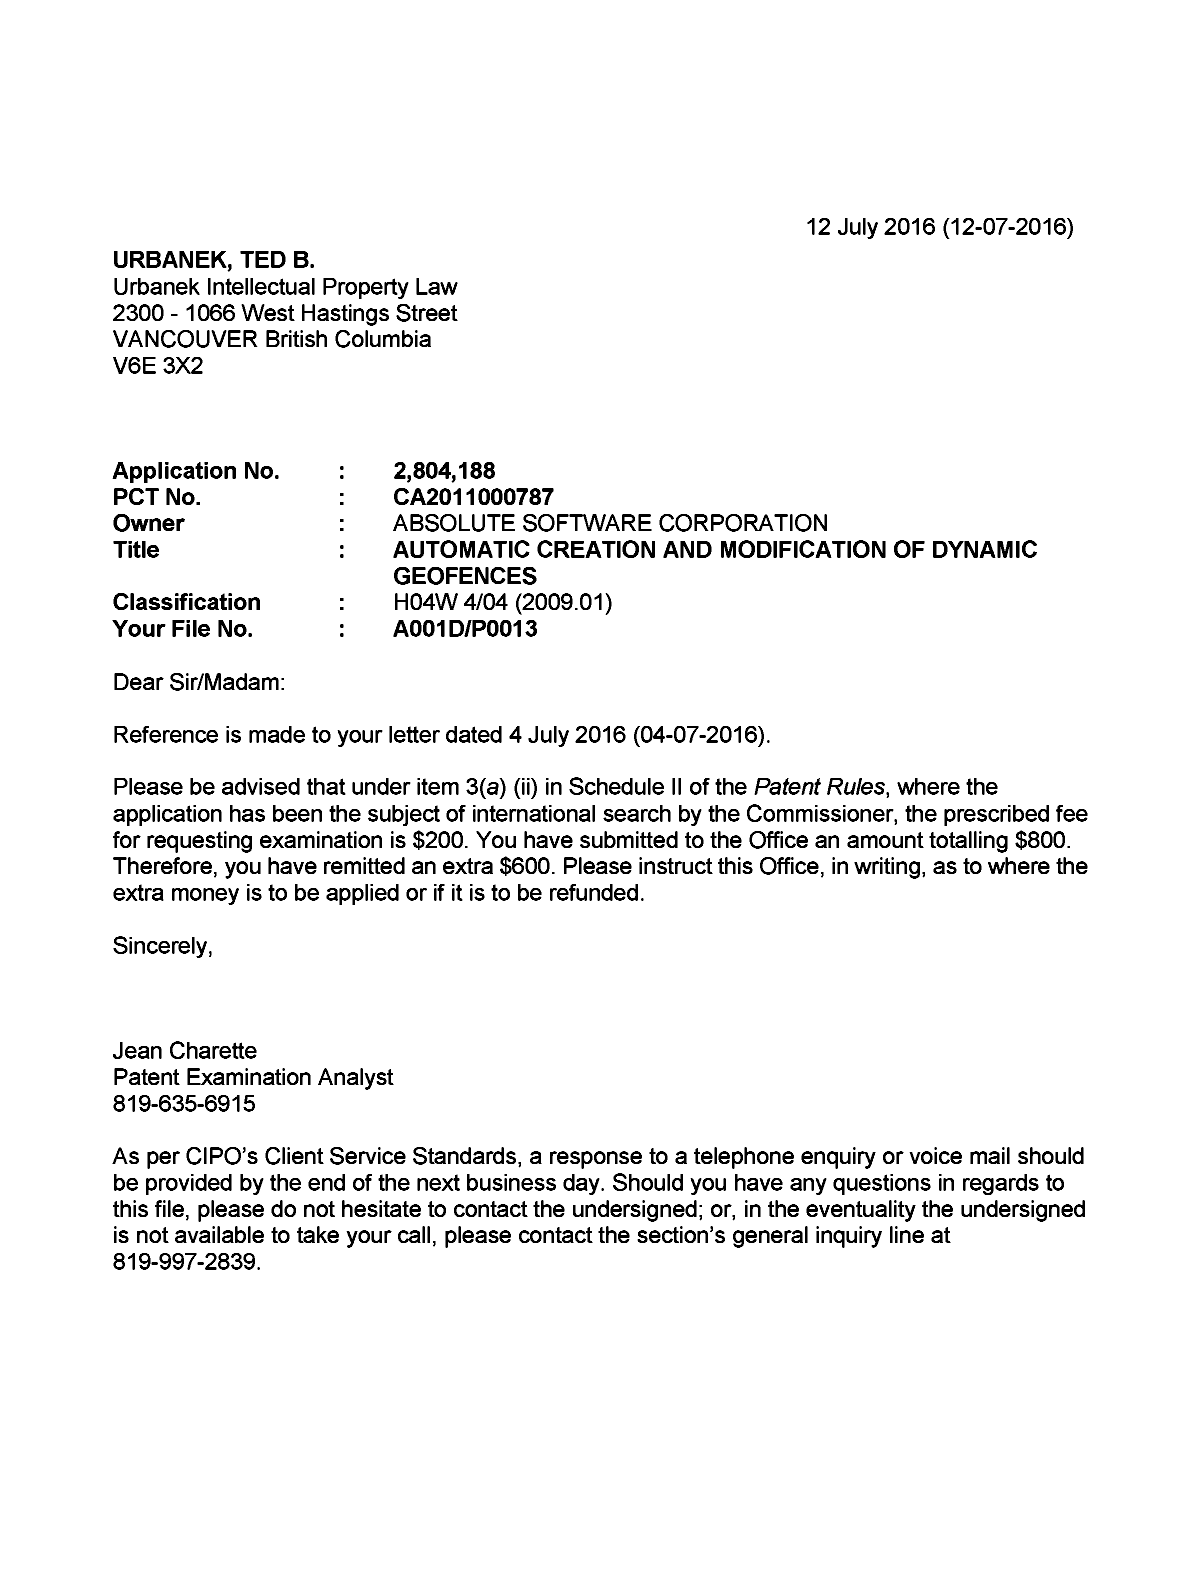 Canadian Patent Document 2804188. Correspondence 20151212. Image 1 of 1